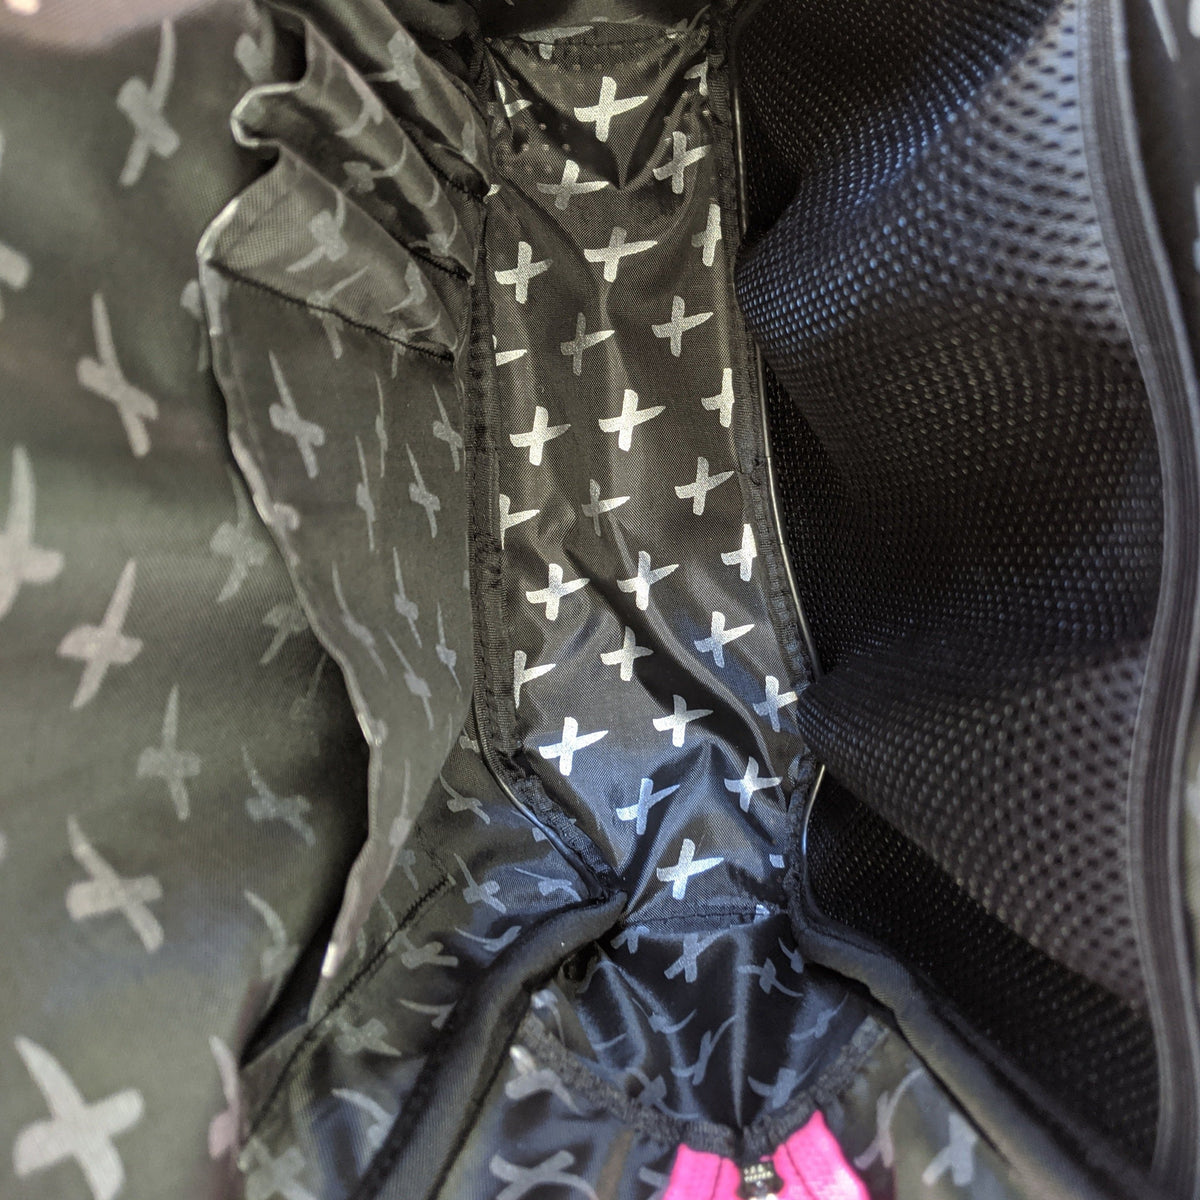 Backpack STARTER Neon Pink